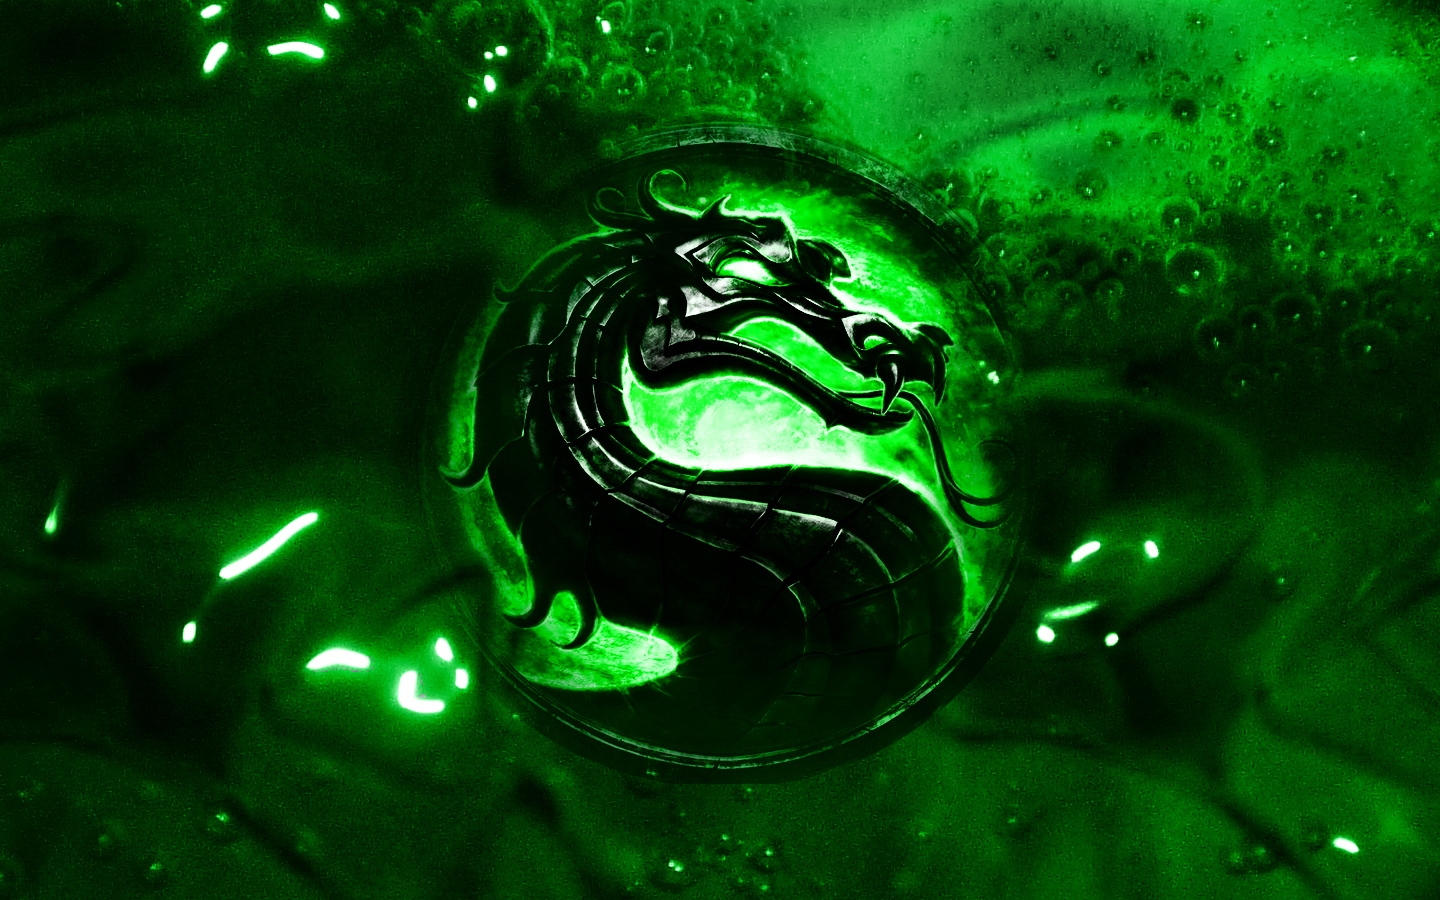 Green Dragons Wallpaper Background